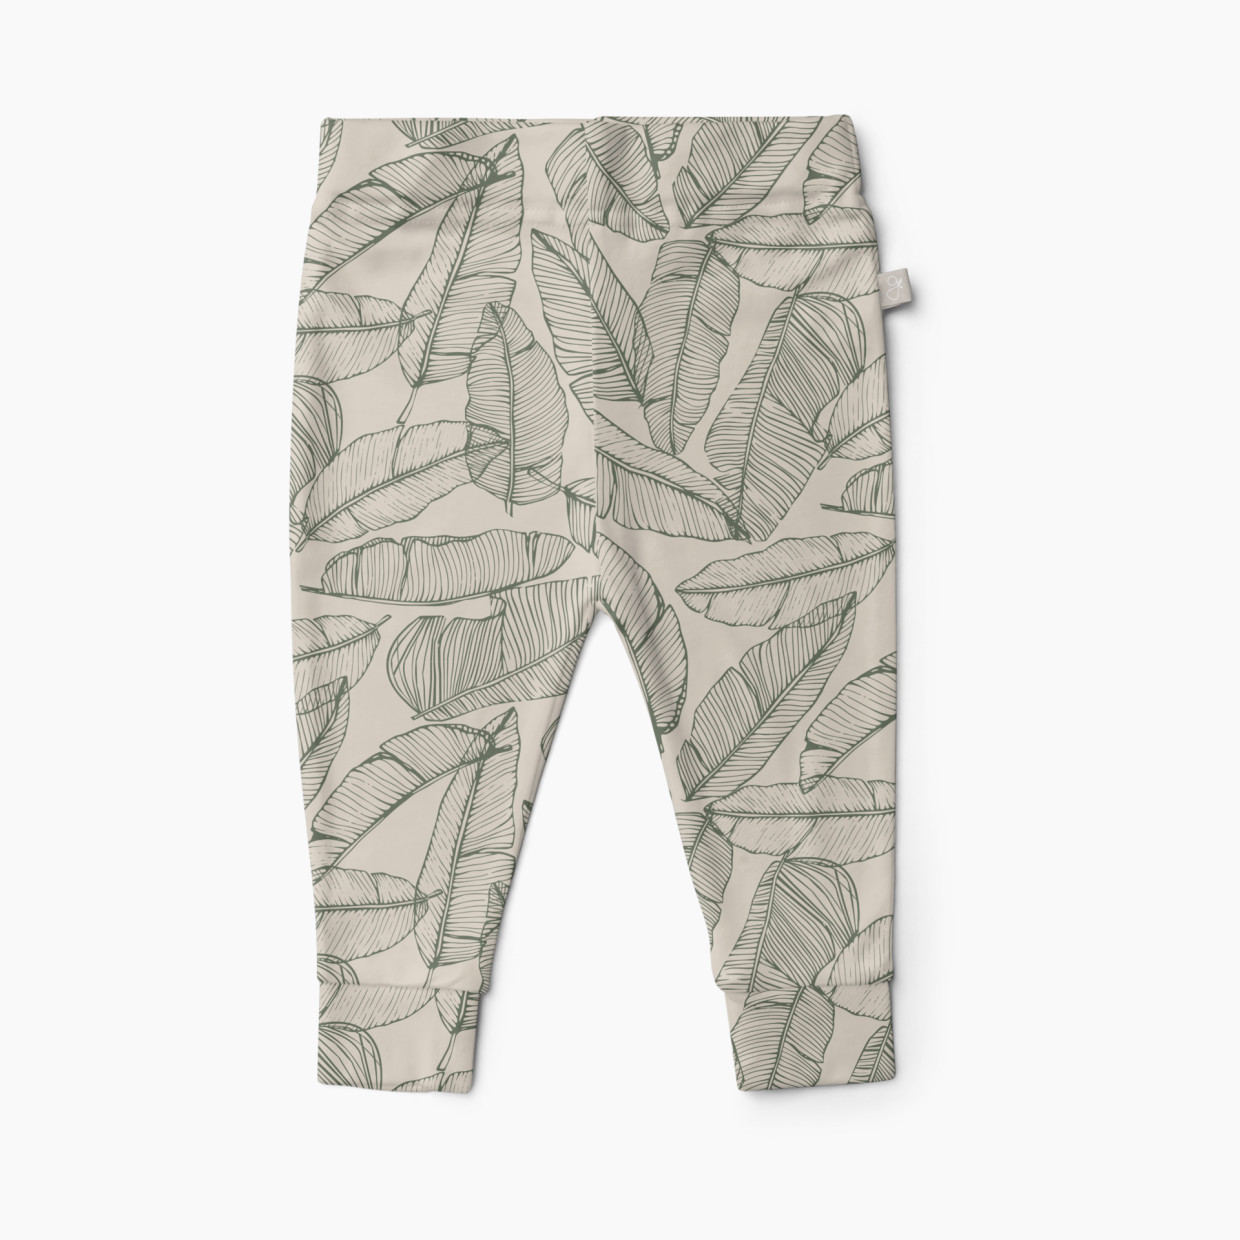 Goumi Kids x Babylist Baby Pants - Banana Leaf, 0-3 M.